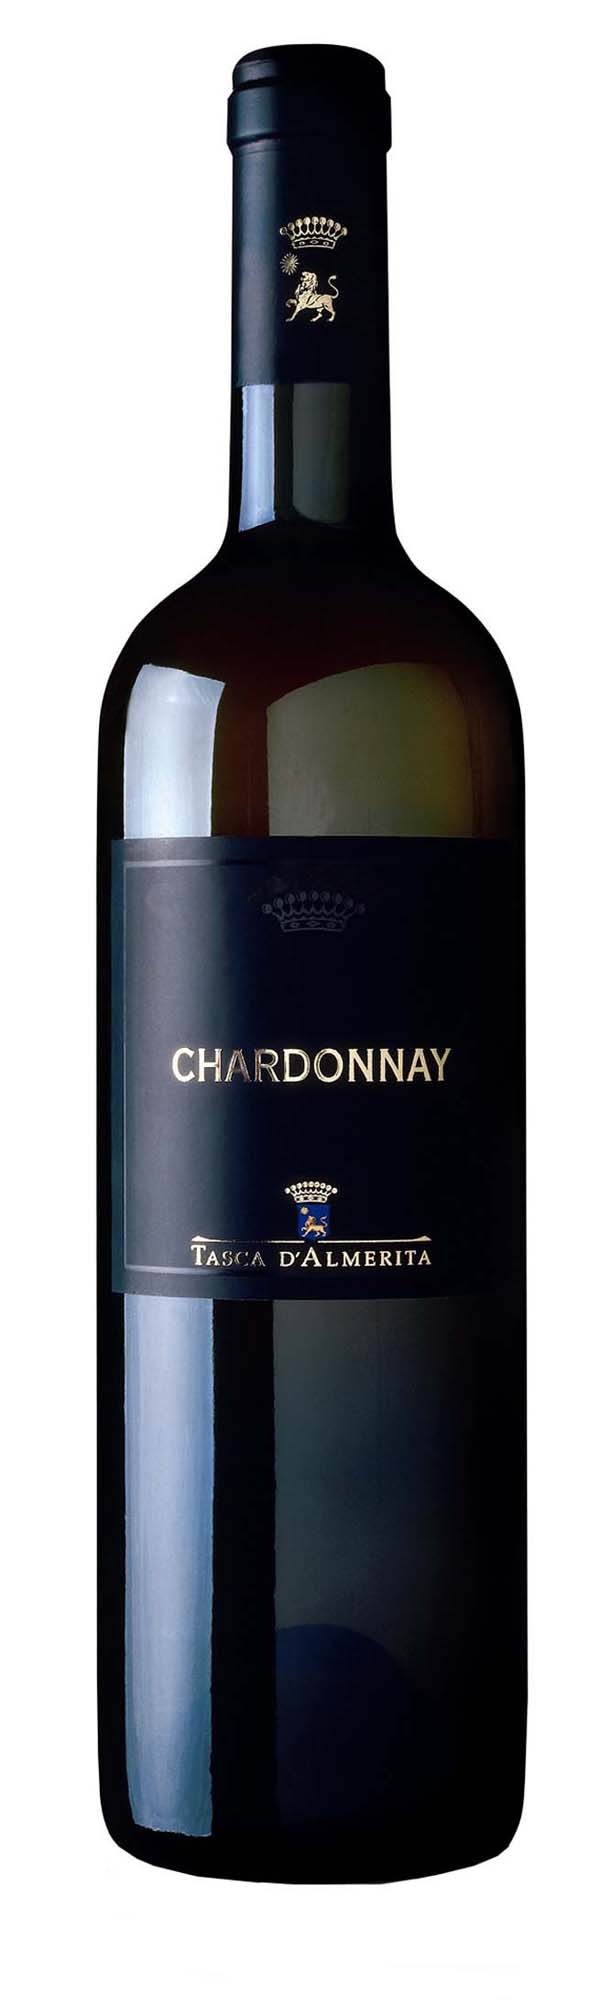 Tasca D'almerita Regaleali Chardonnay 2016 750ml